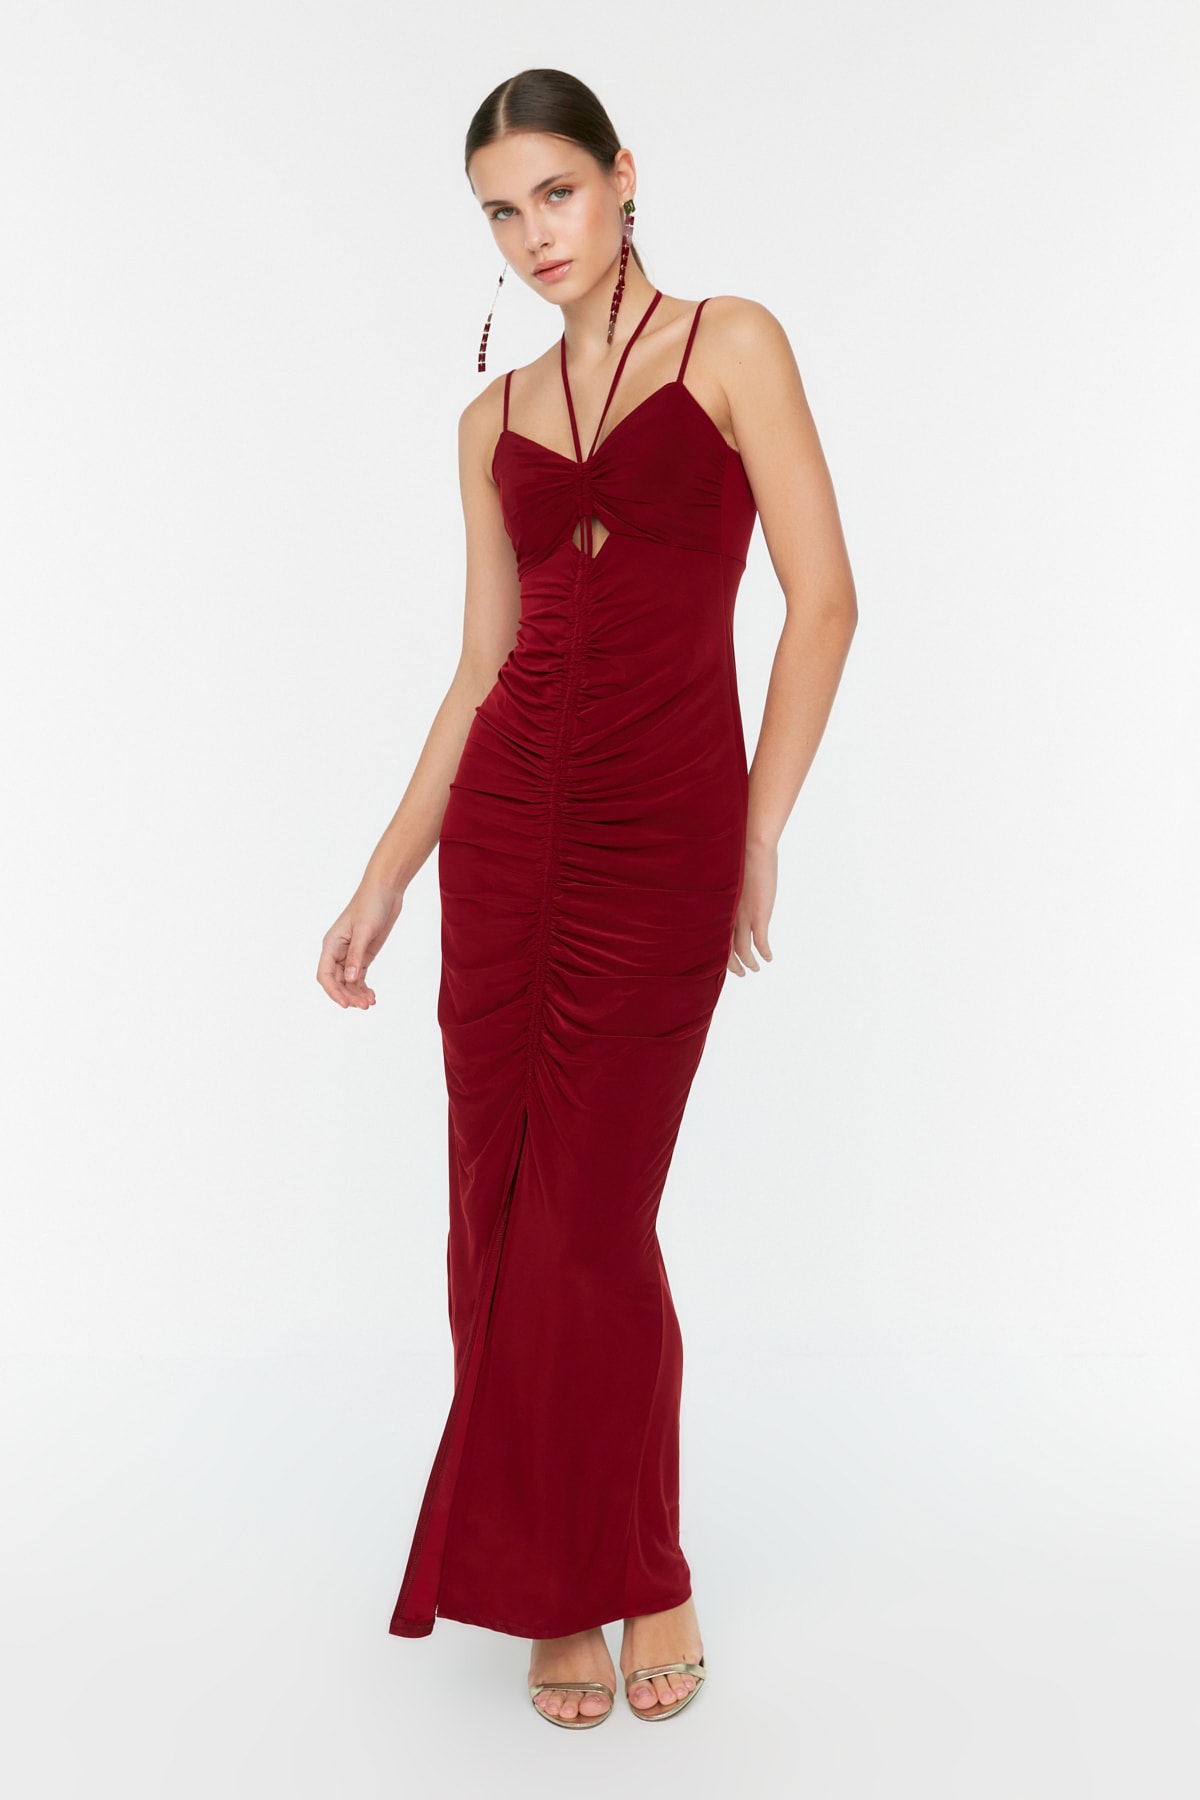 Trendyol Collection Abendkleid & Abschlusskleid Bordeaux Meerjungfrau-Linie Fast ausverkauft